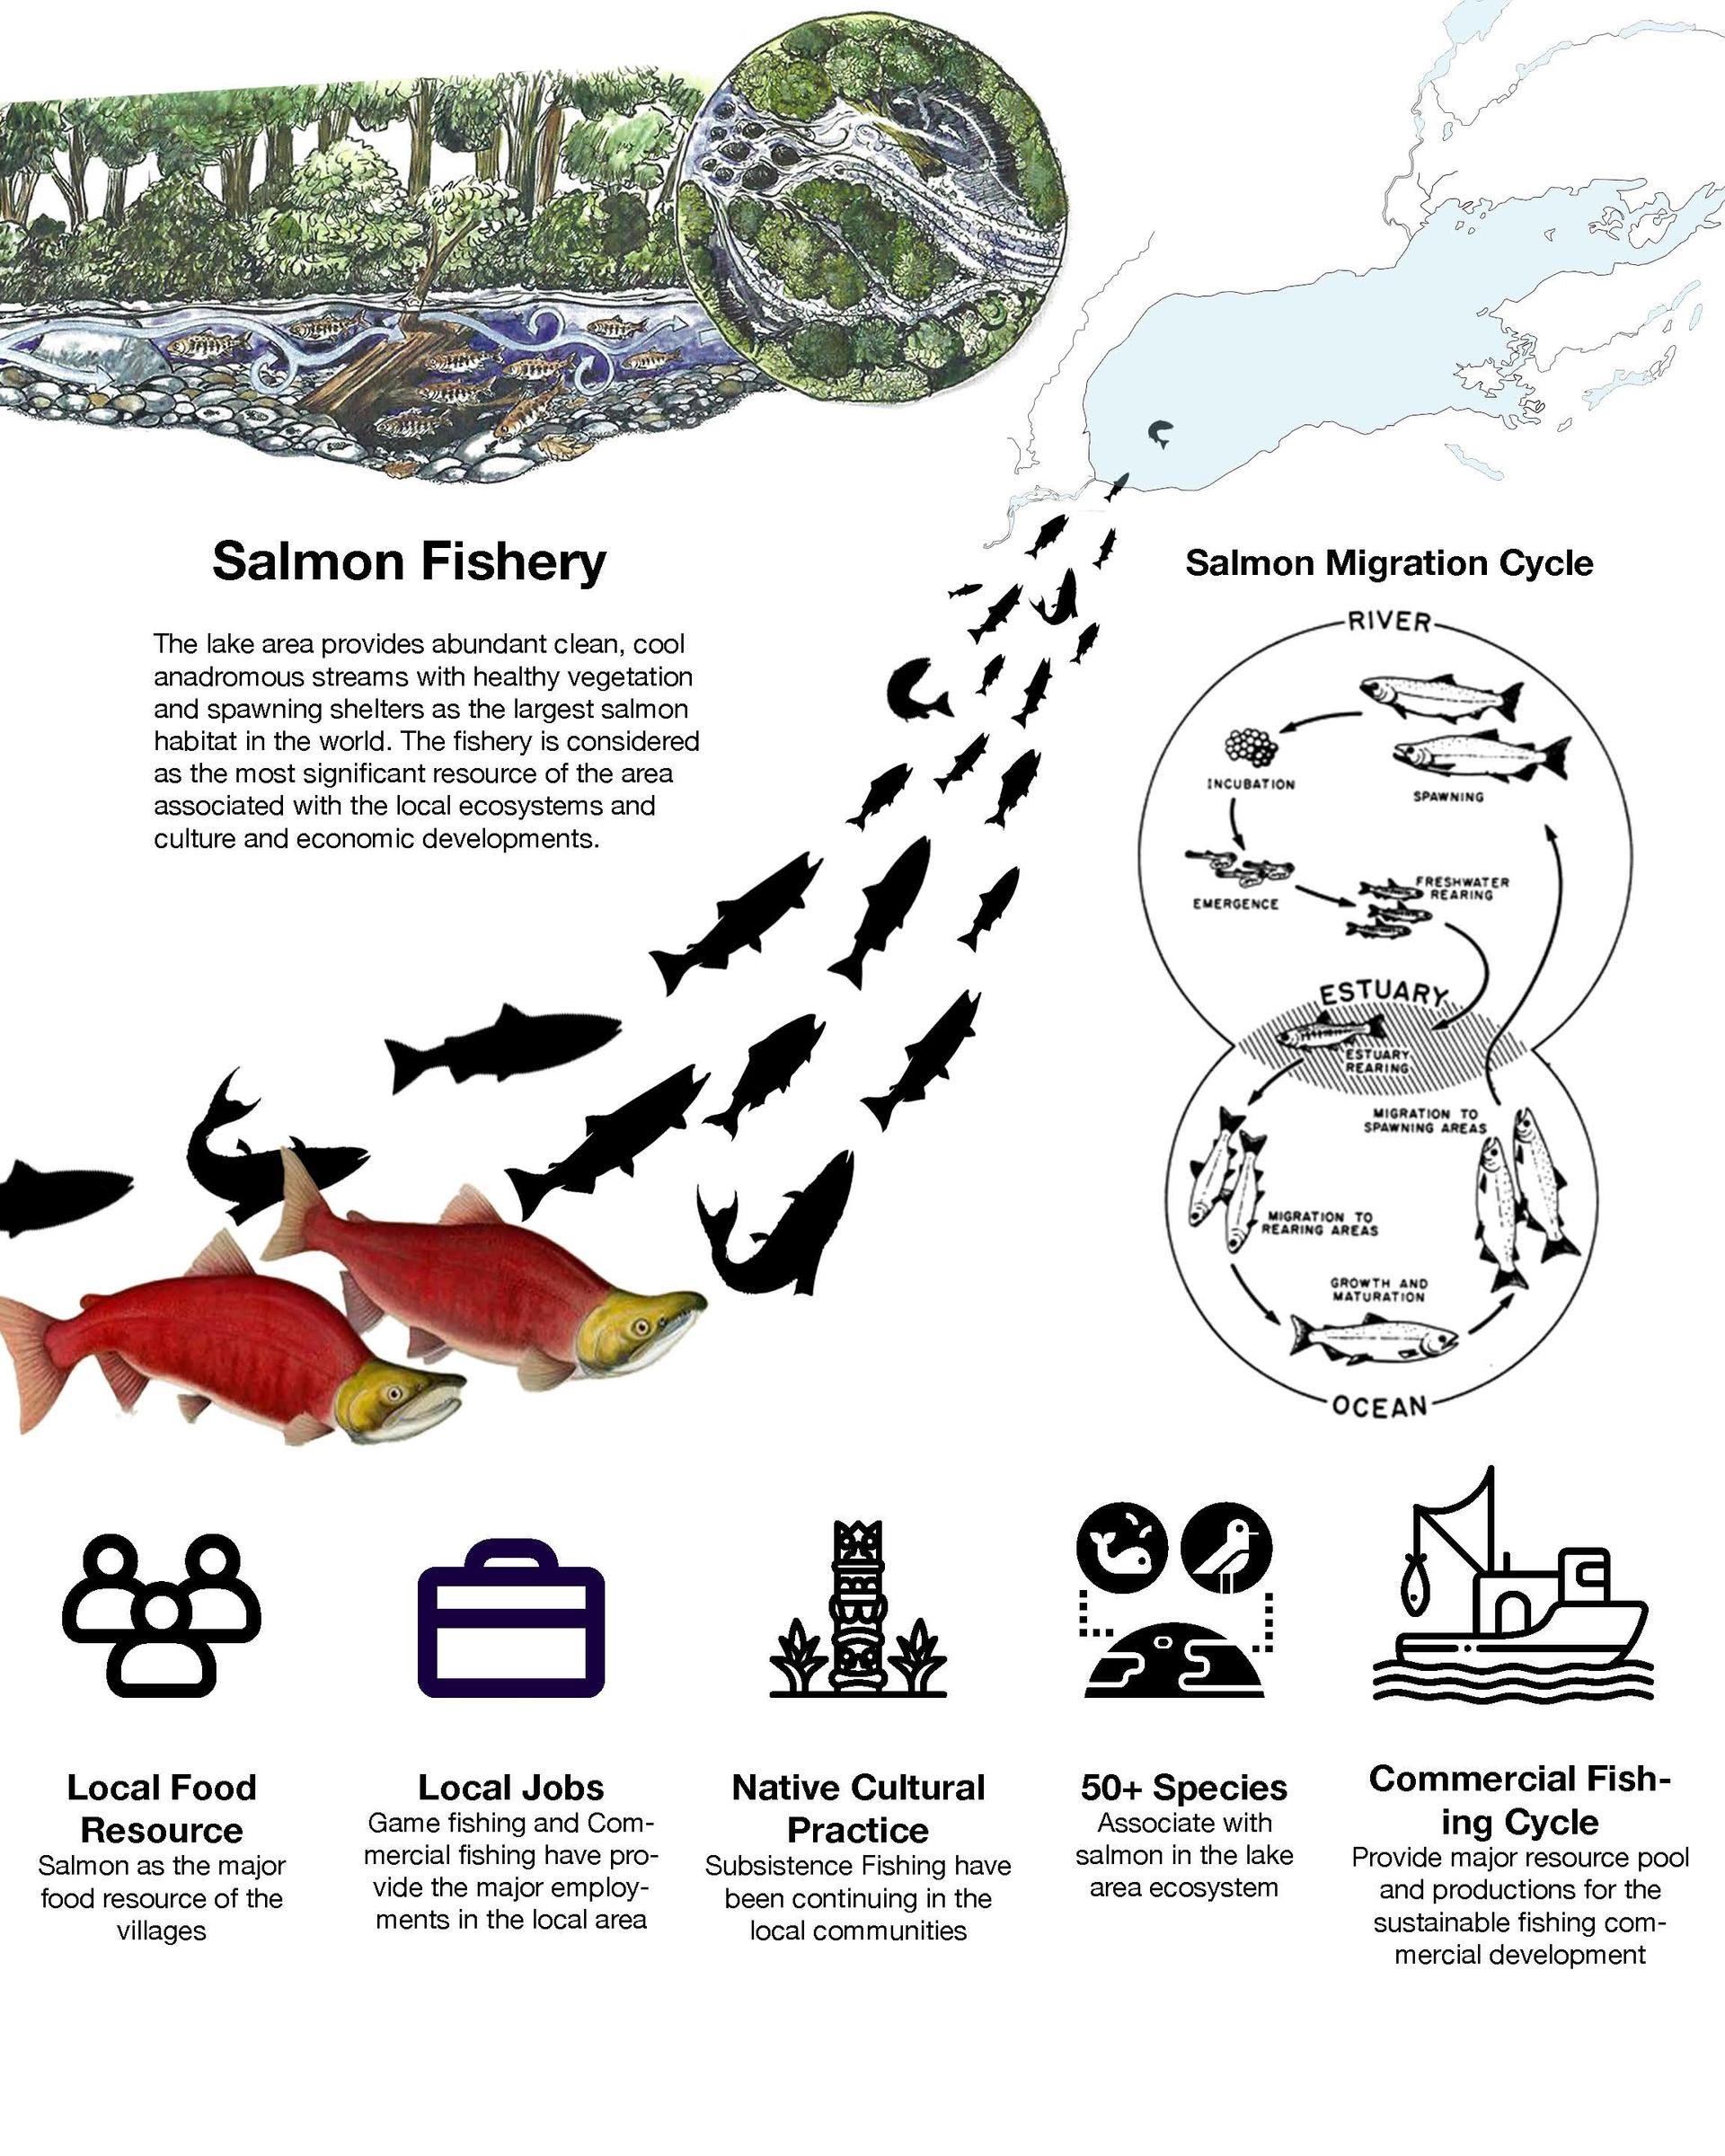 Salmon related diagrams